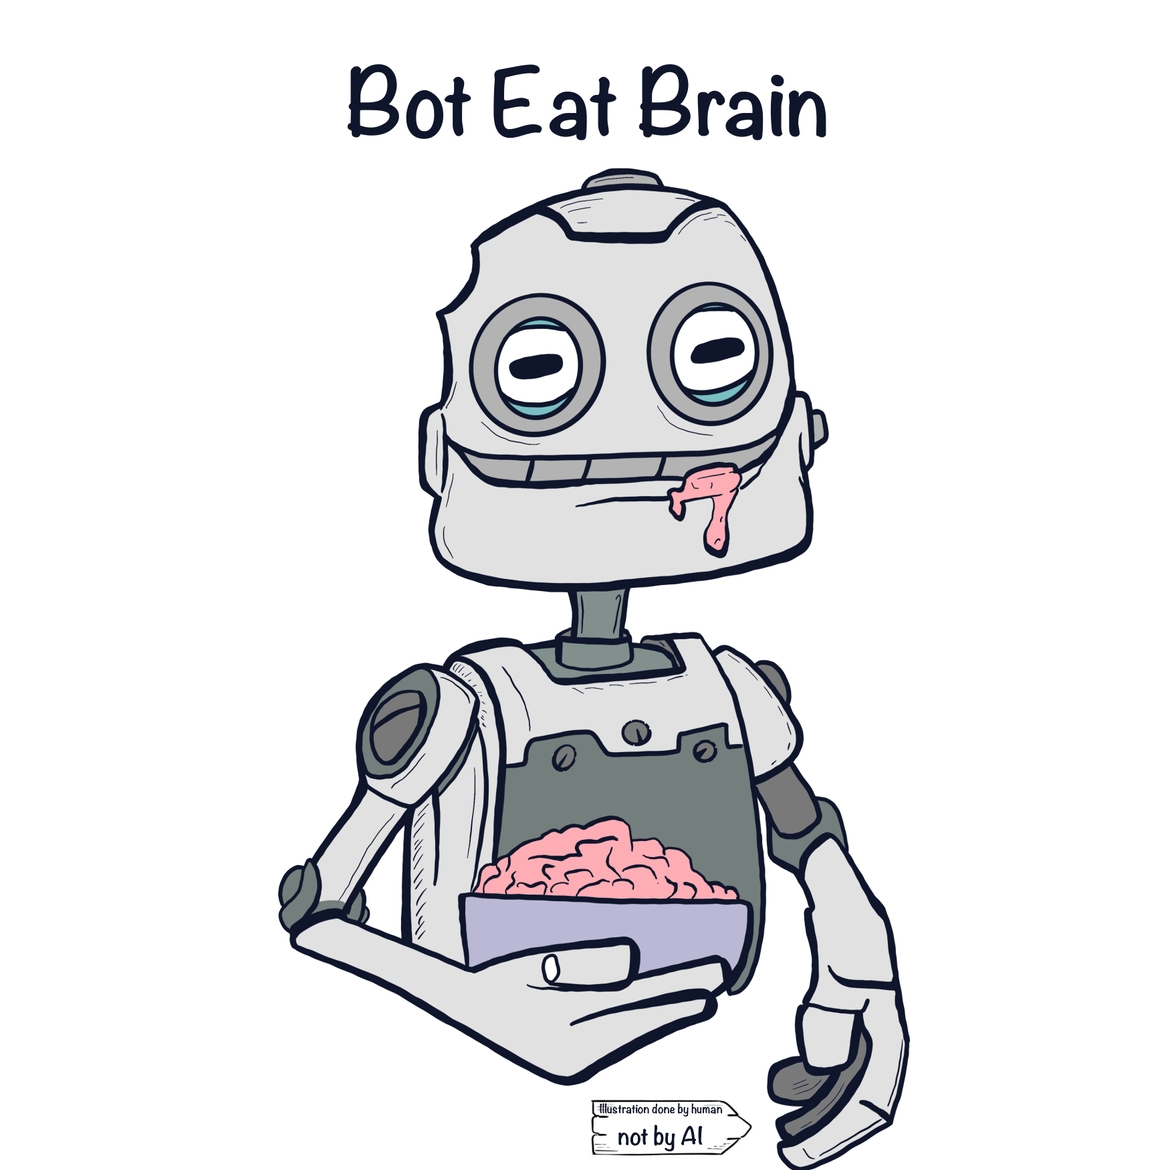 Bot eats brain